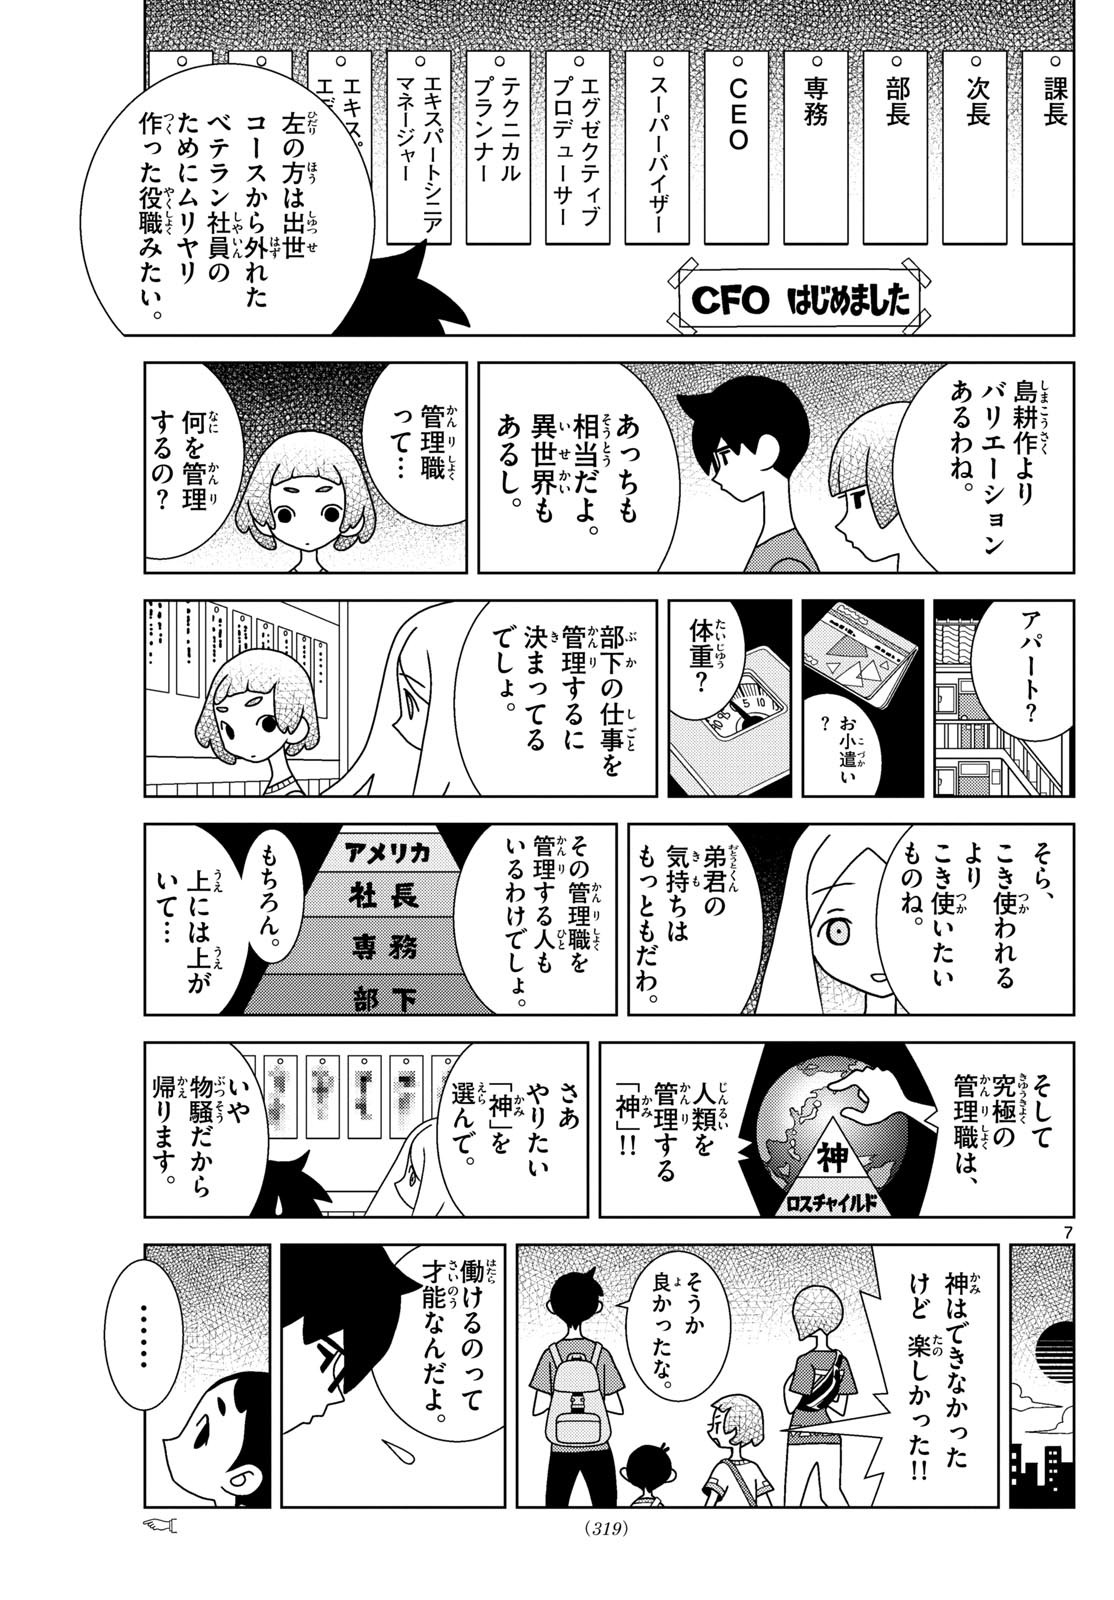 Shibuya Near Family - Chapter 066 - Page 7